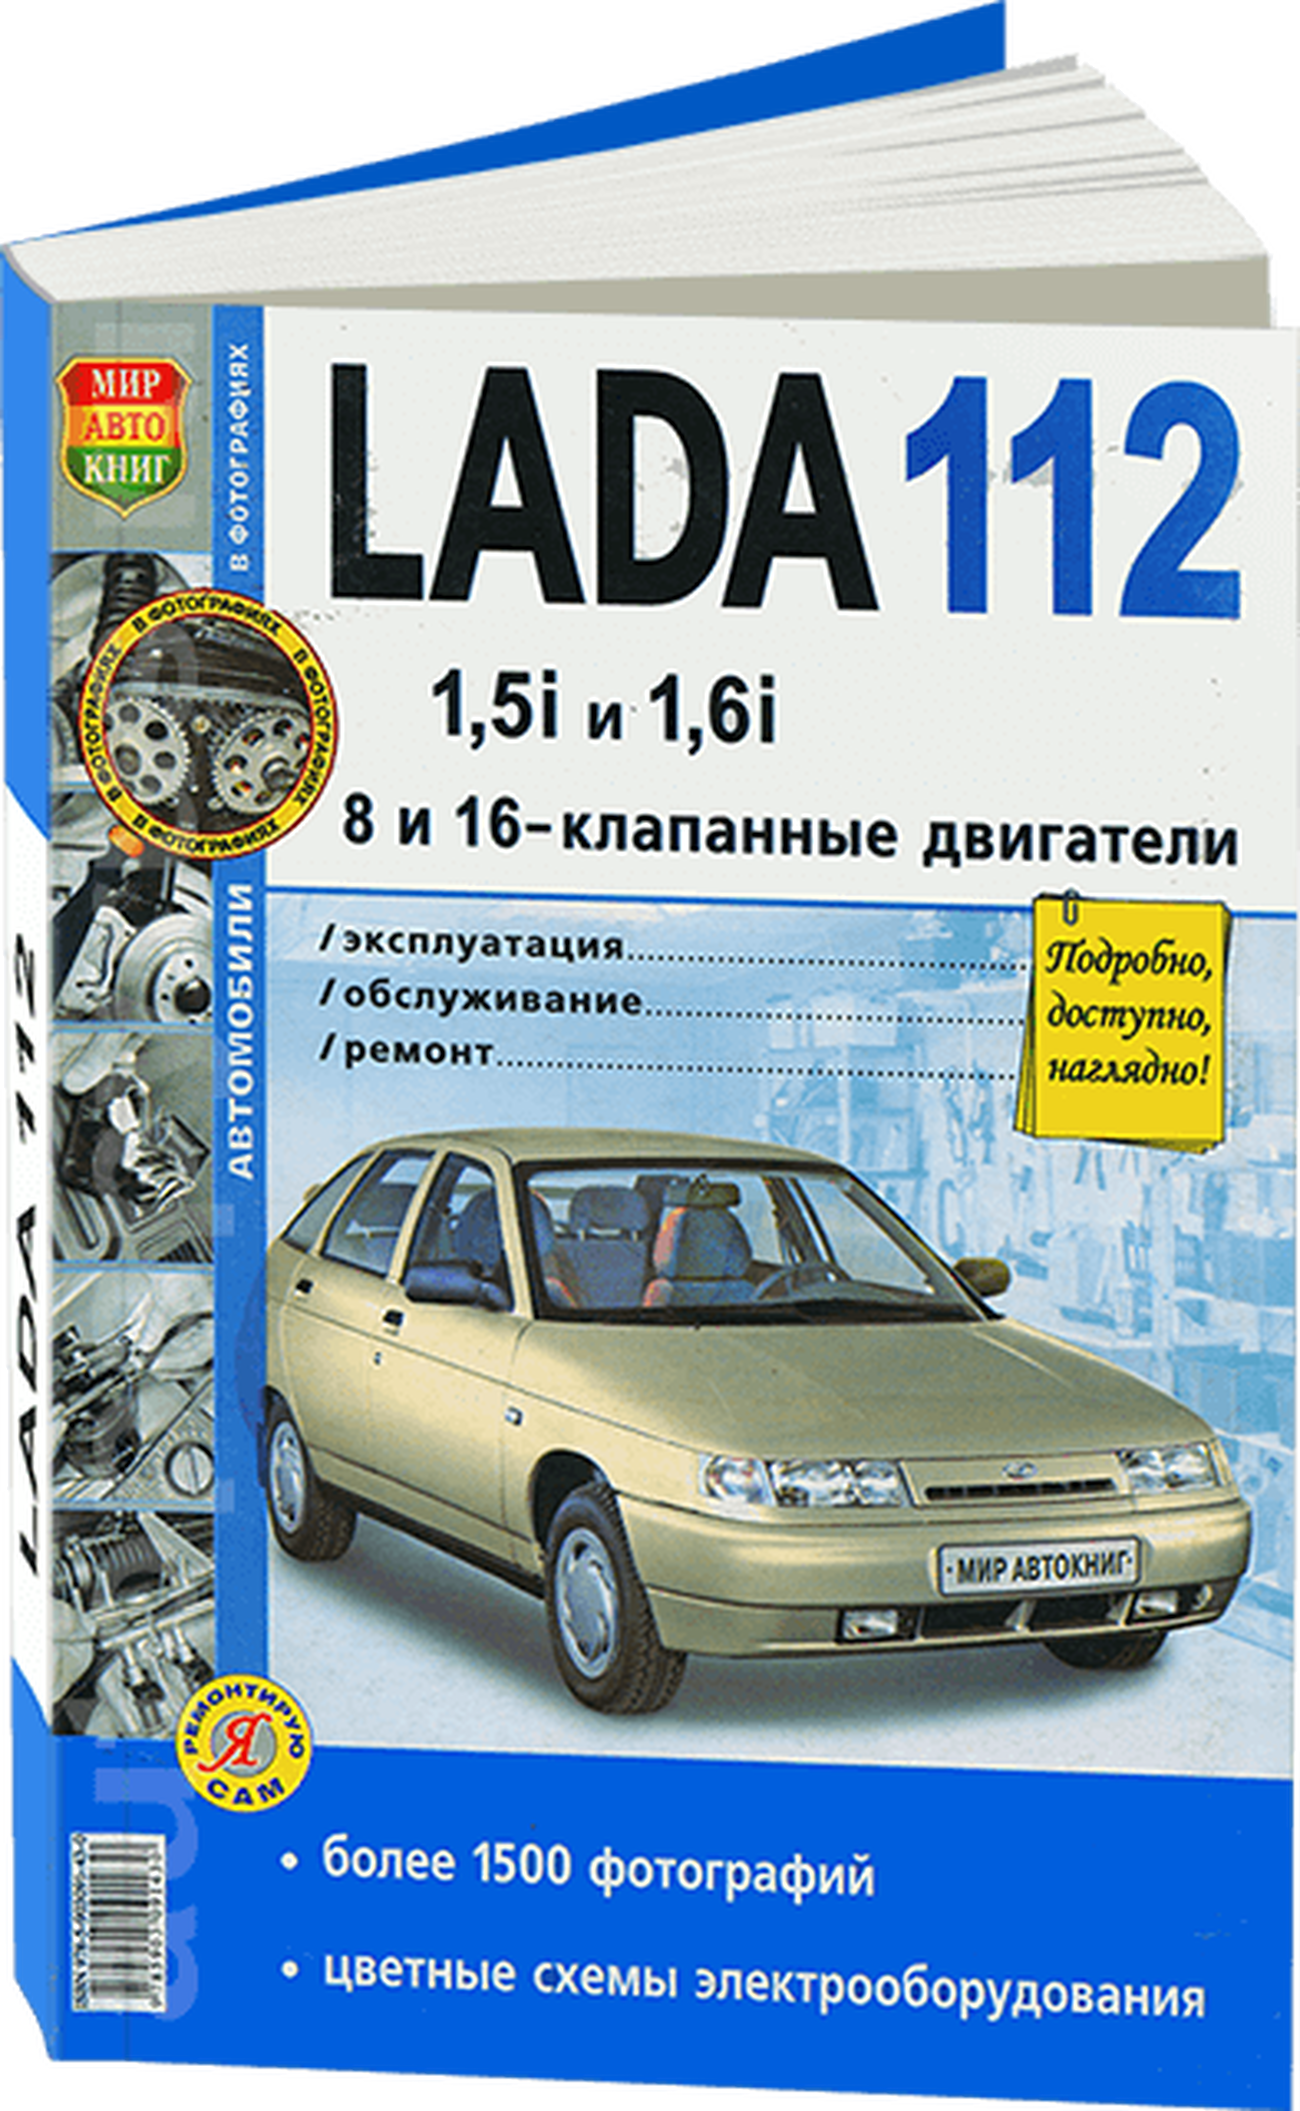 Книга: LADA 112 (ВАЗ 2112) (б) рем., экспл., то | Мир Автокниг